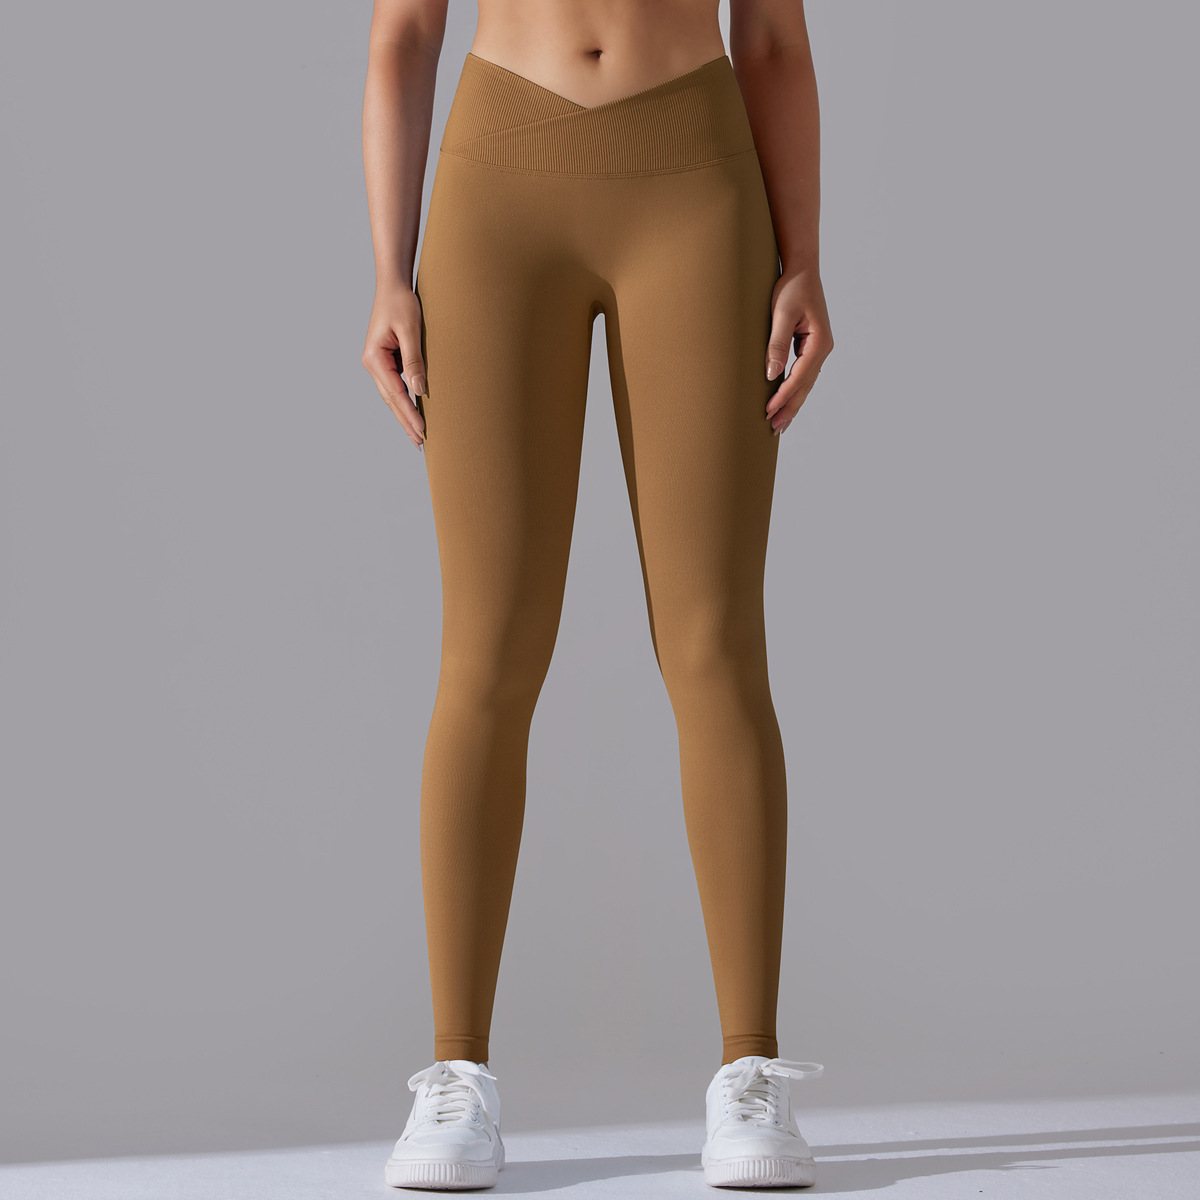 lulu align brown leggings｜TikTok Search